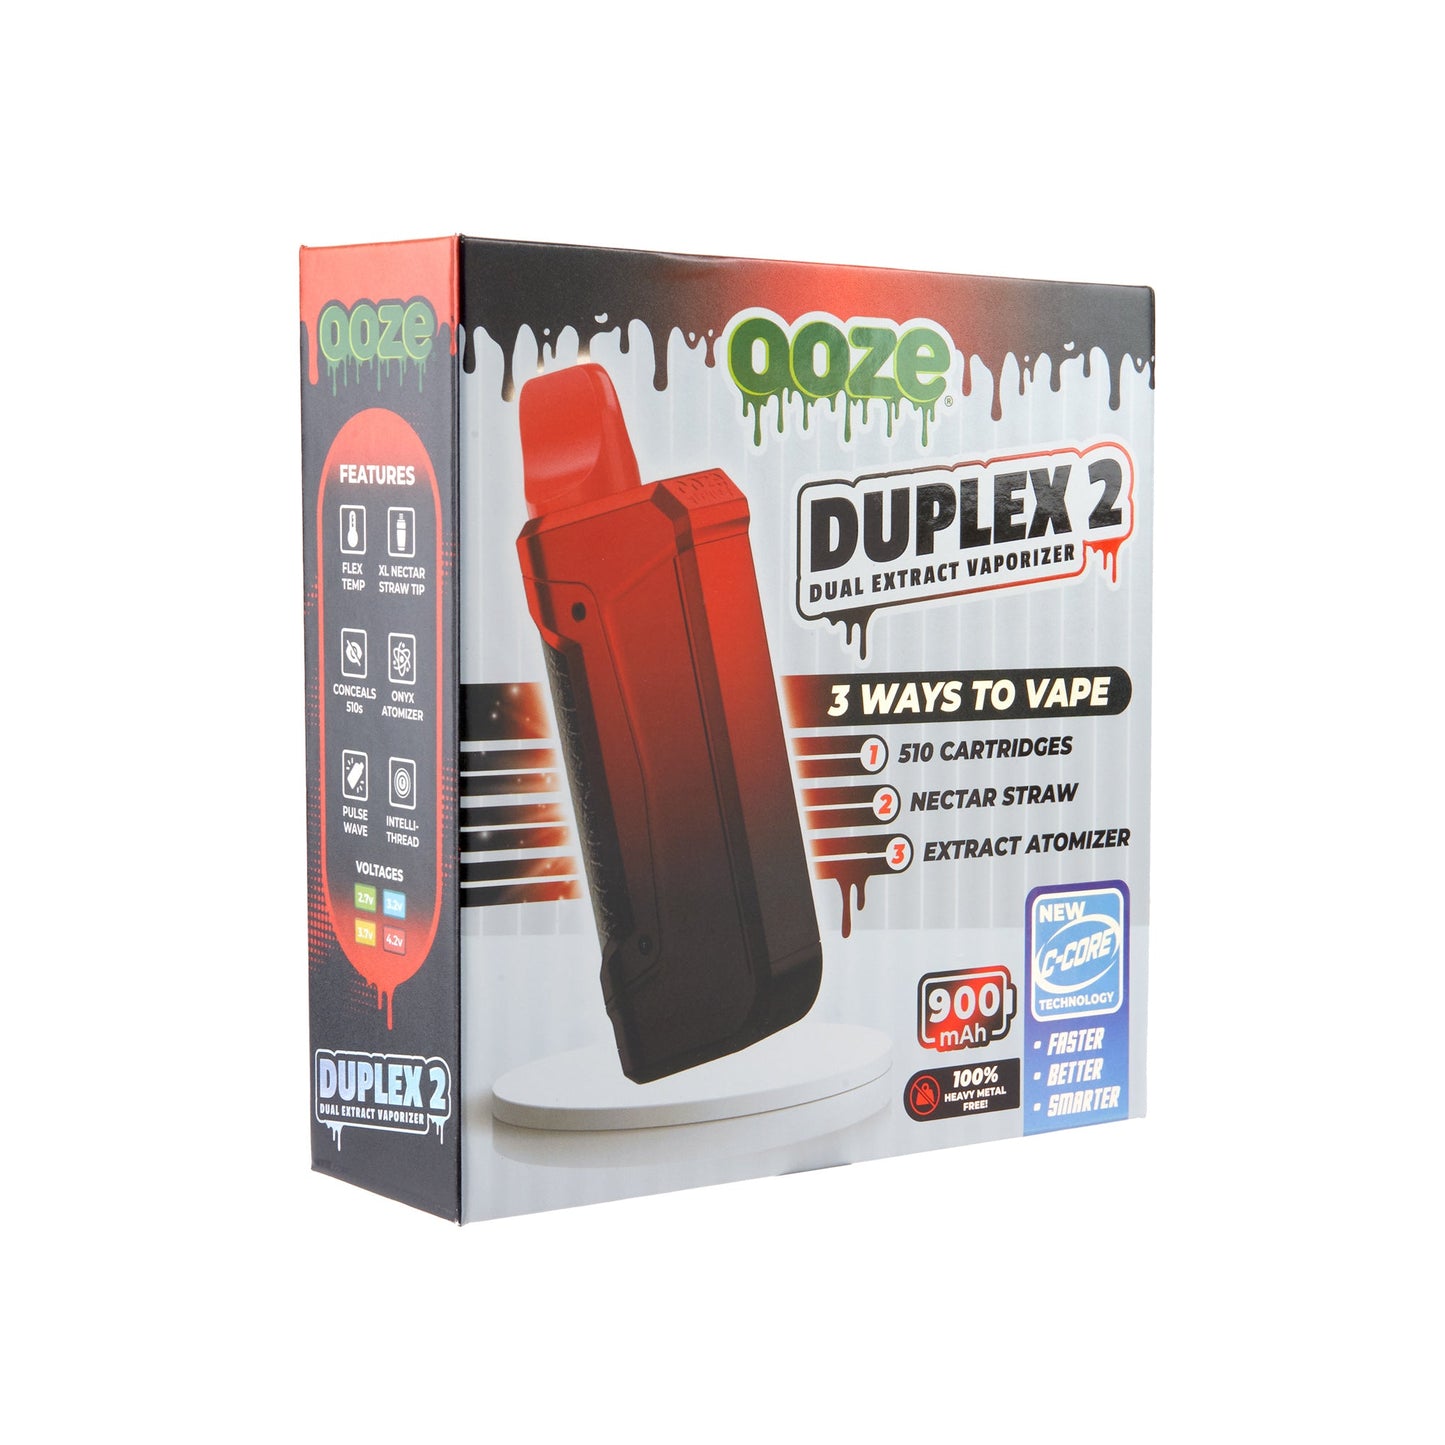 Duplex 2 Vaporizer– 900 mAh C-Core